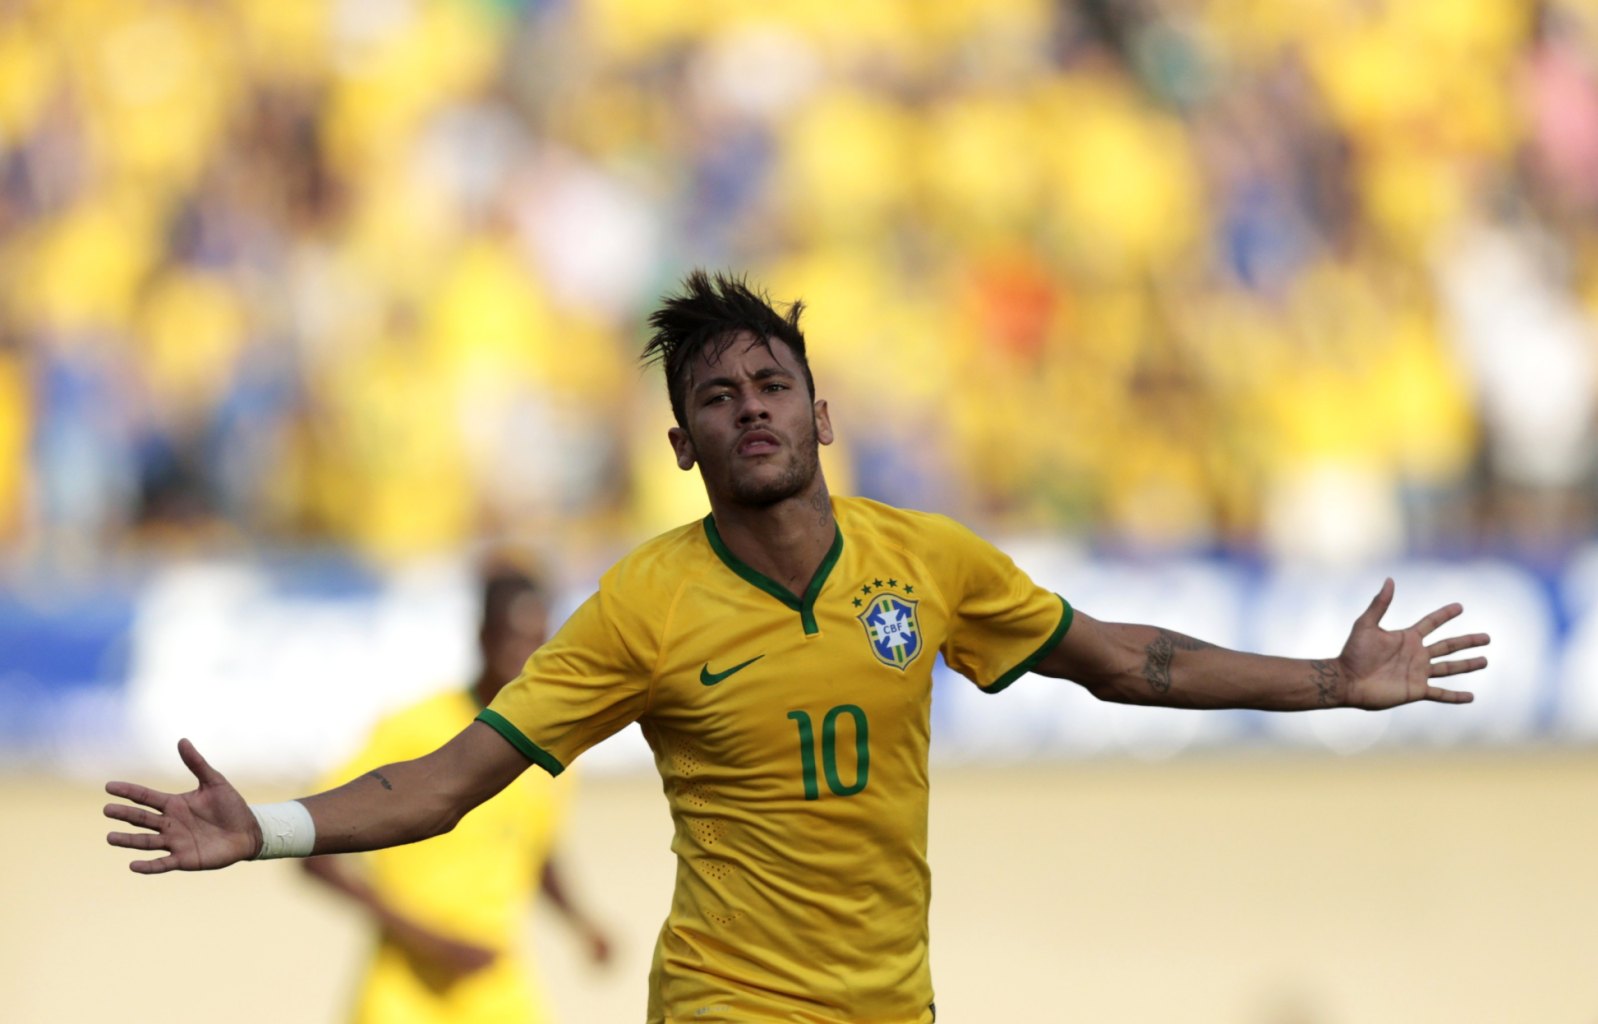 Neymar scores opening goal for Brazil in friendly vs Panama in 2014